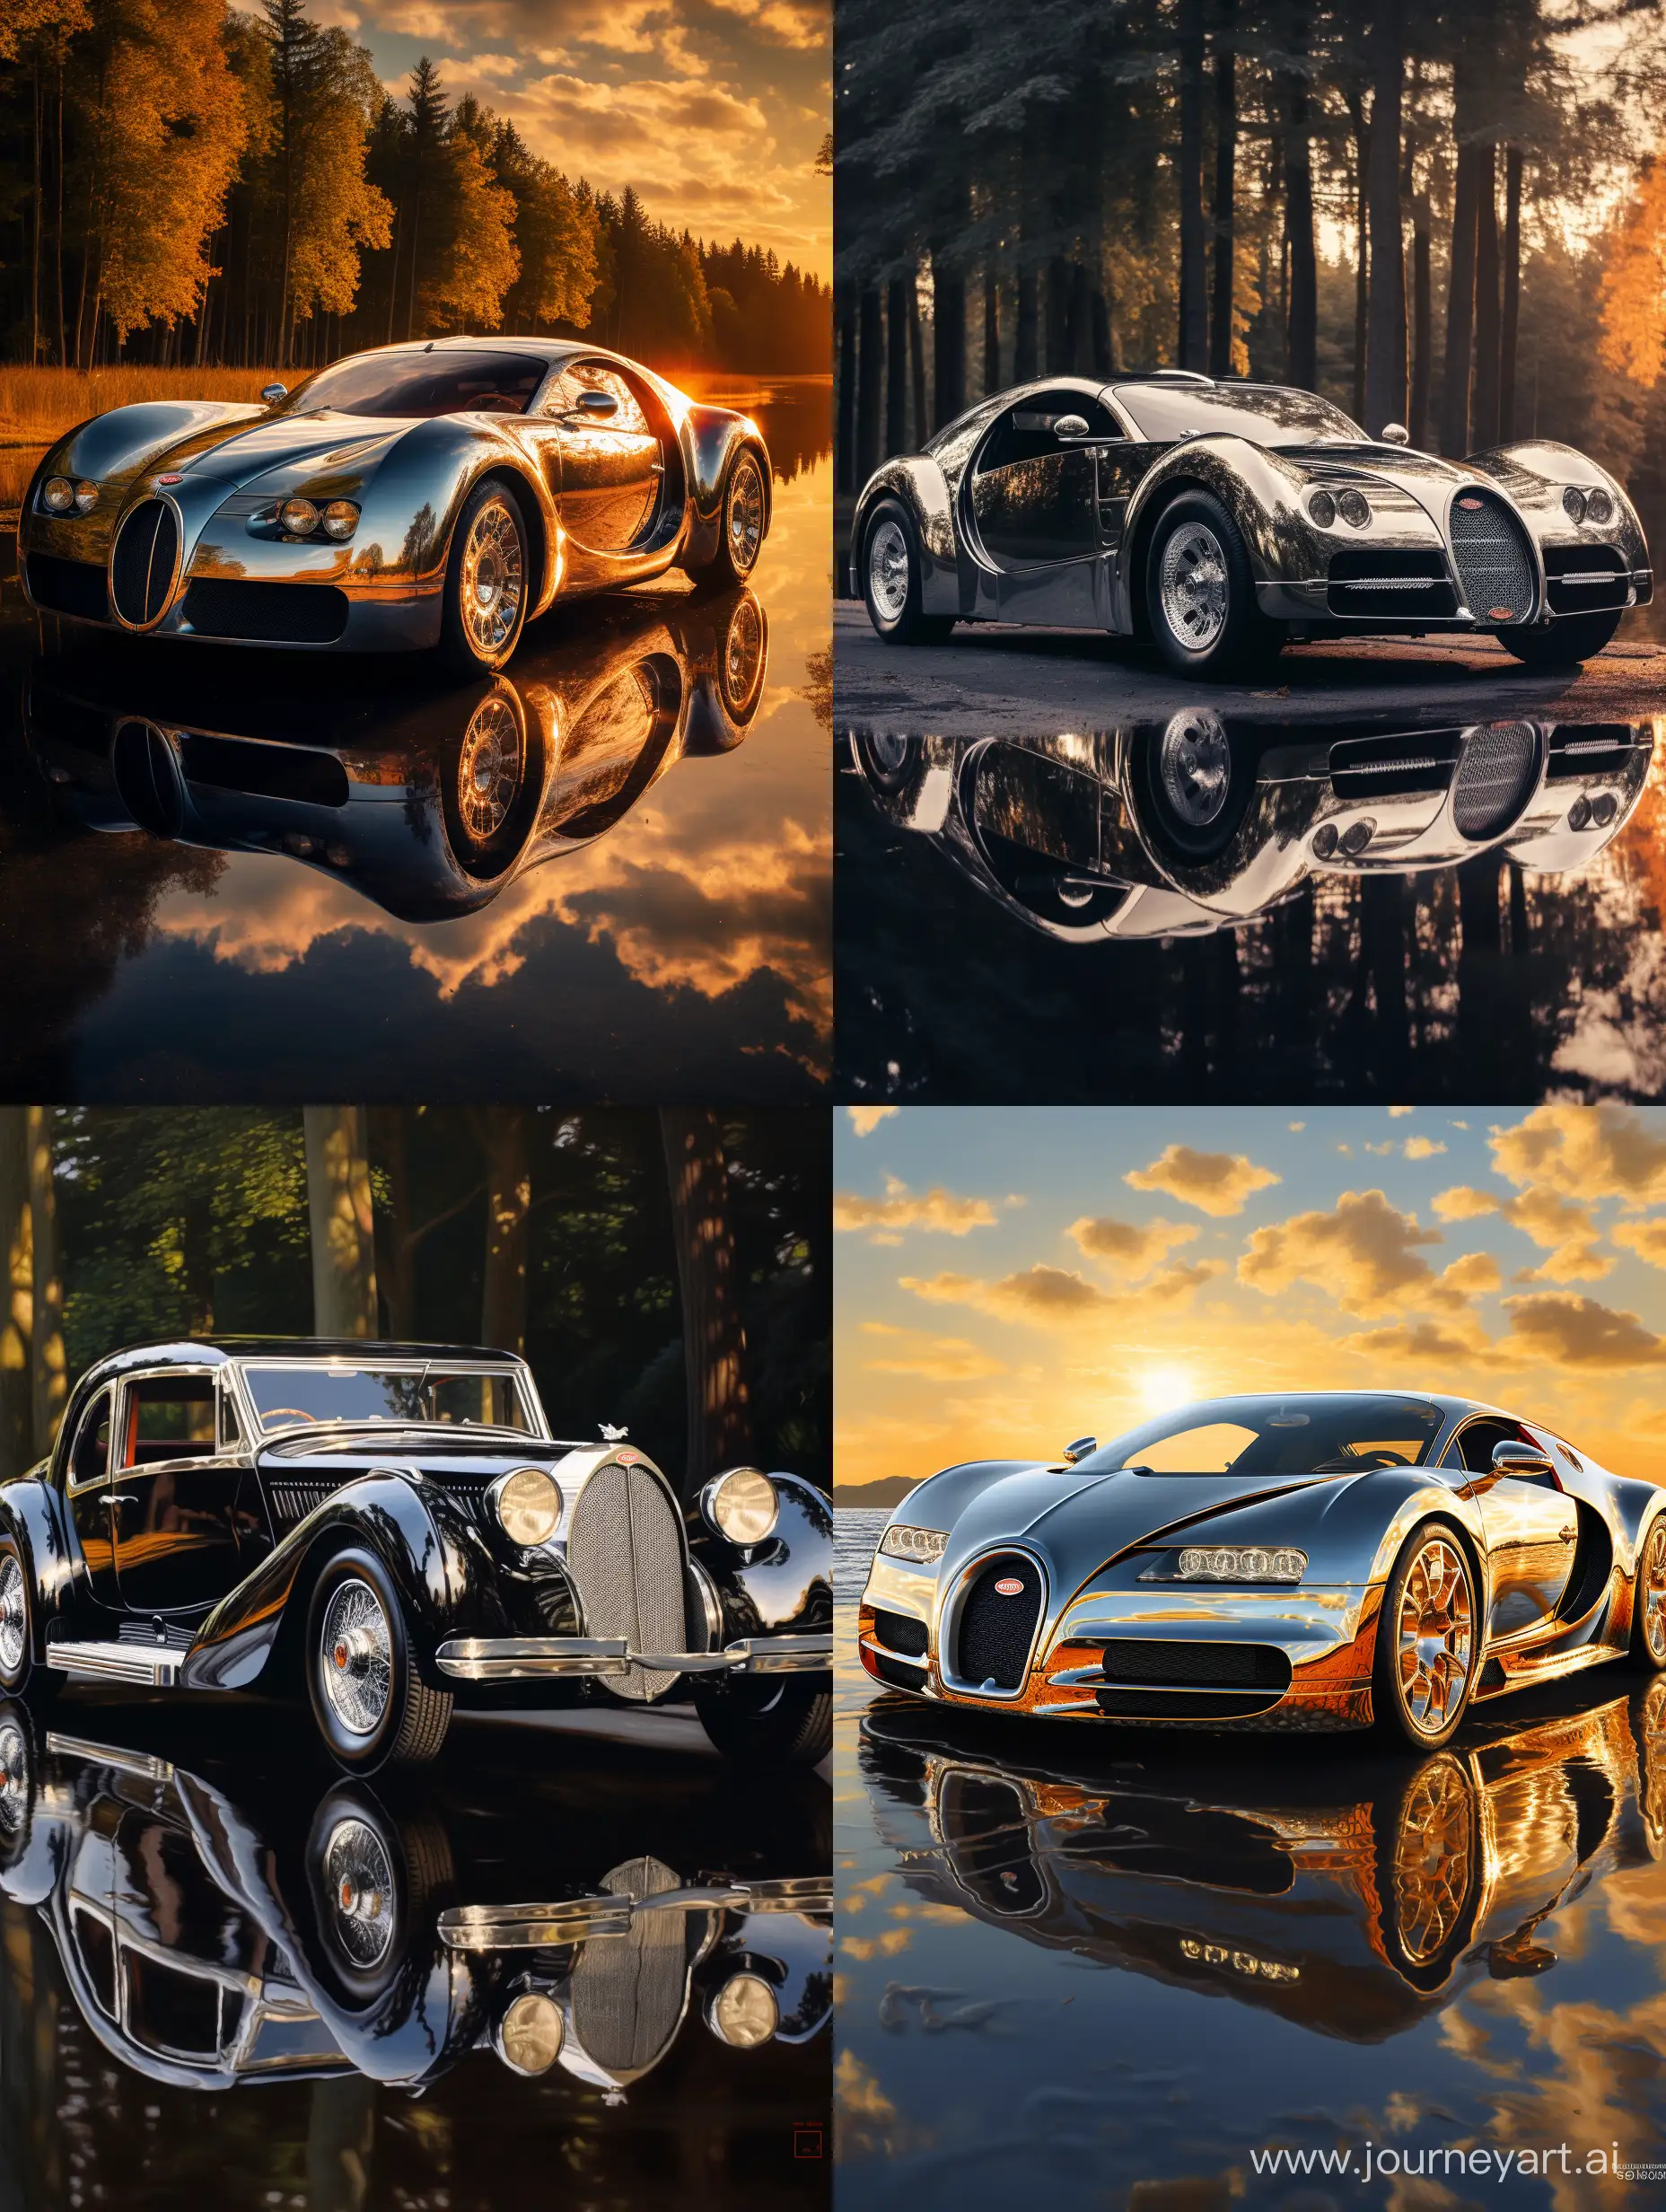 Epic-Realism-Bugatti-Car-Striking-Sunlight-Reflections-in-Dramatic-Water-Setting